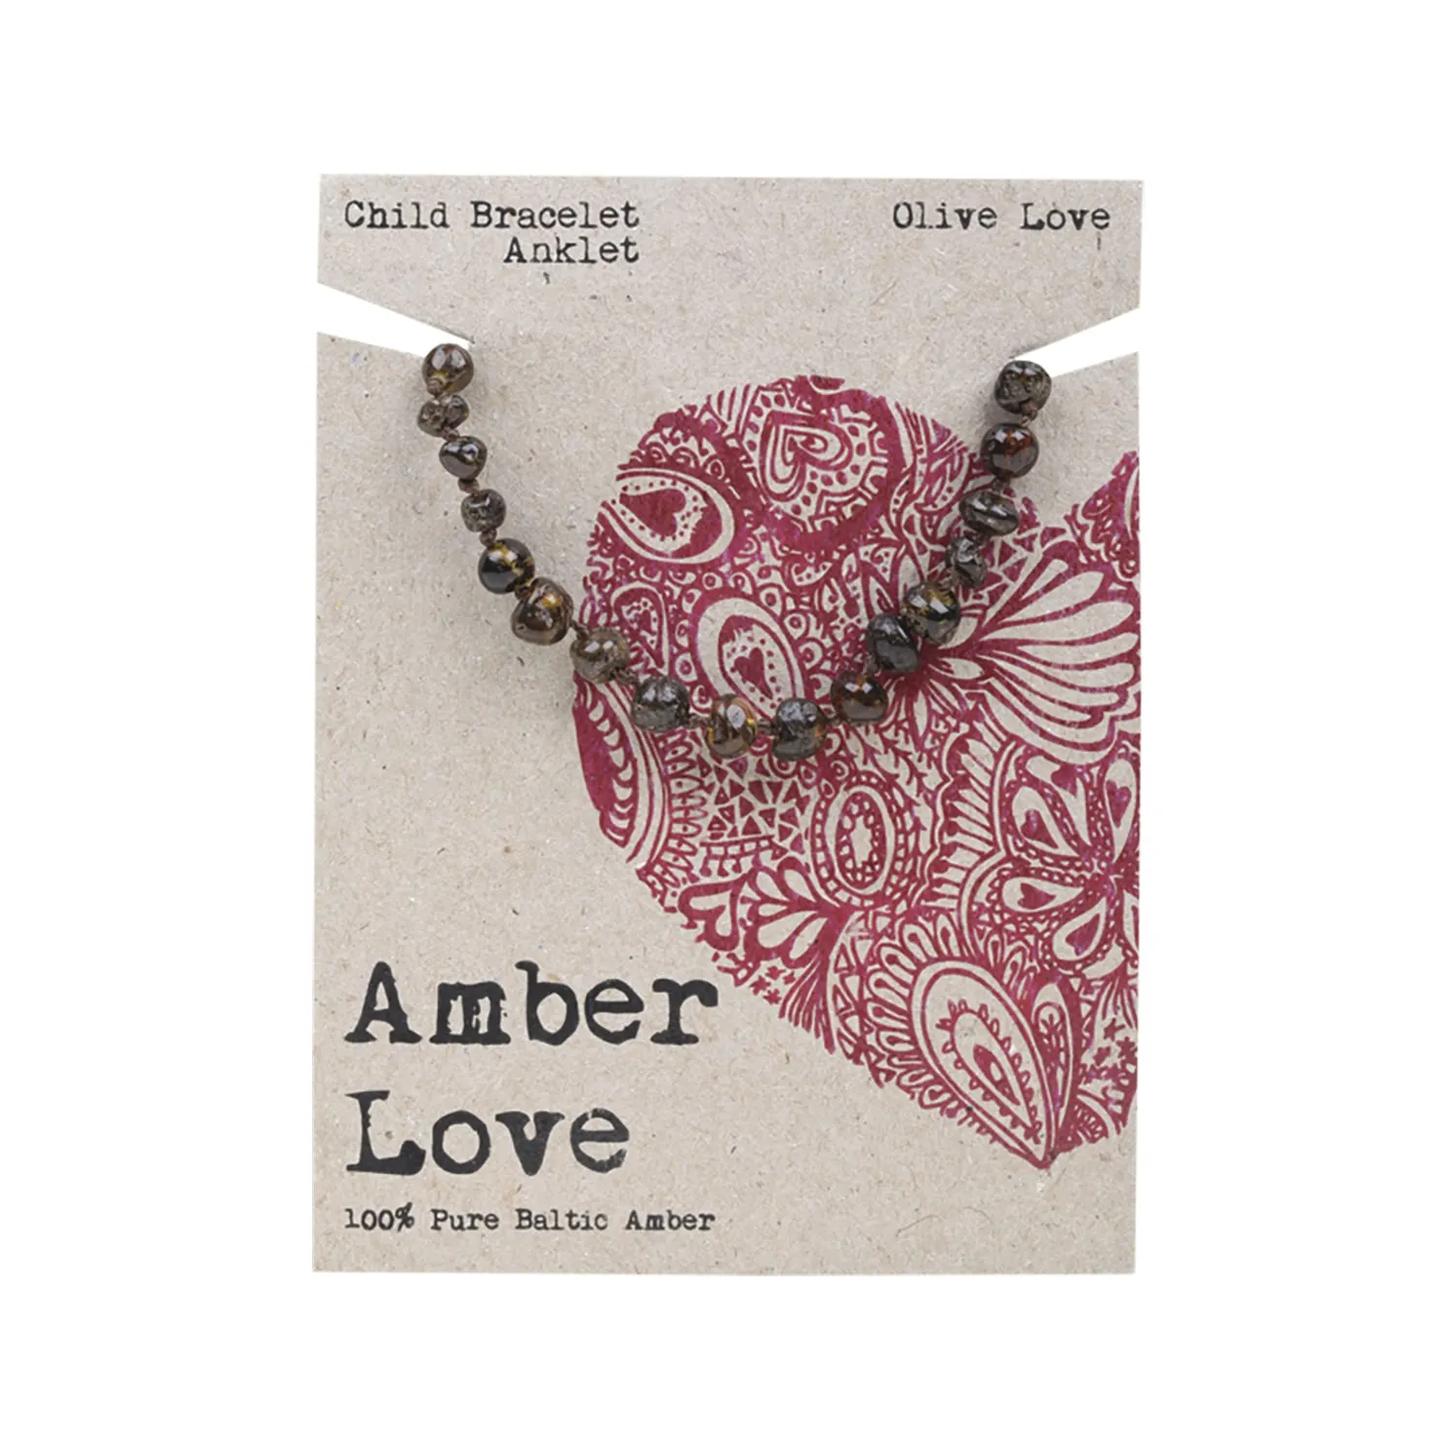 Amber Love 100% Baltic Amber, Children's Bracelet/Anklet 14cm, Please Choose Your Design